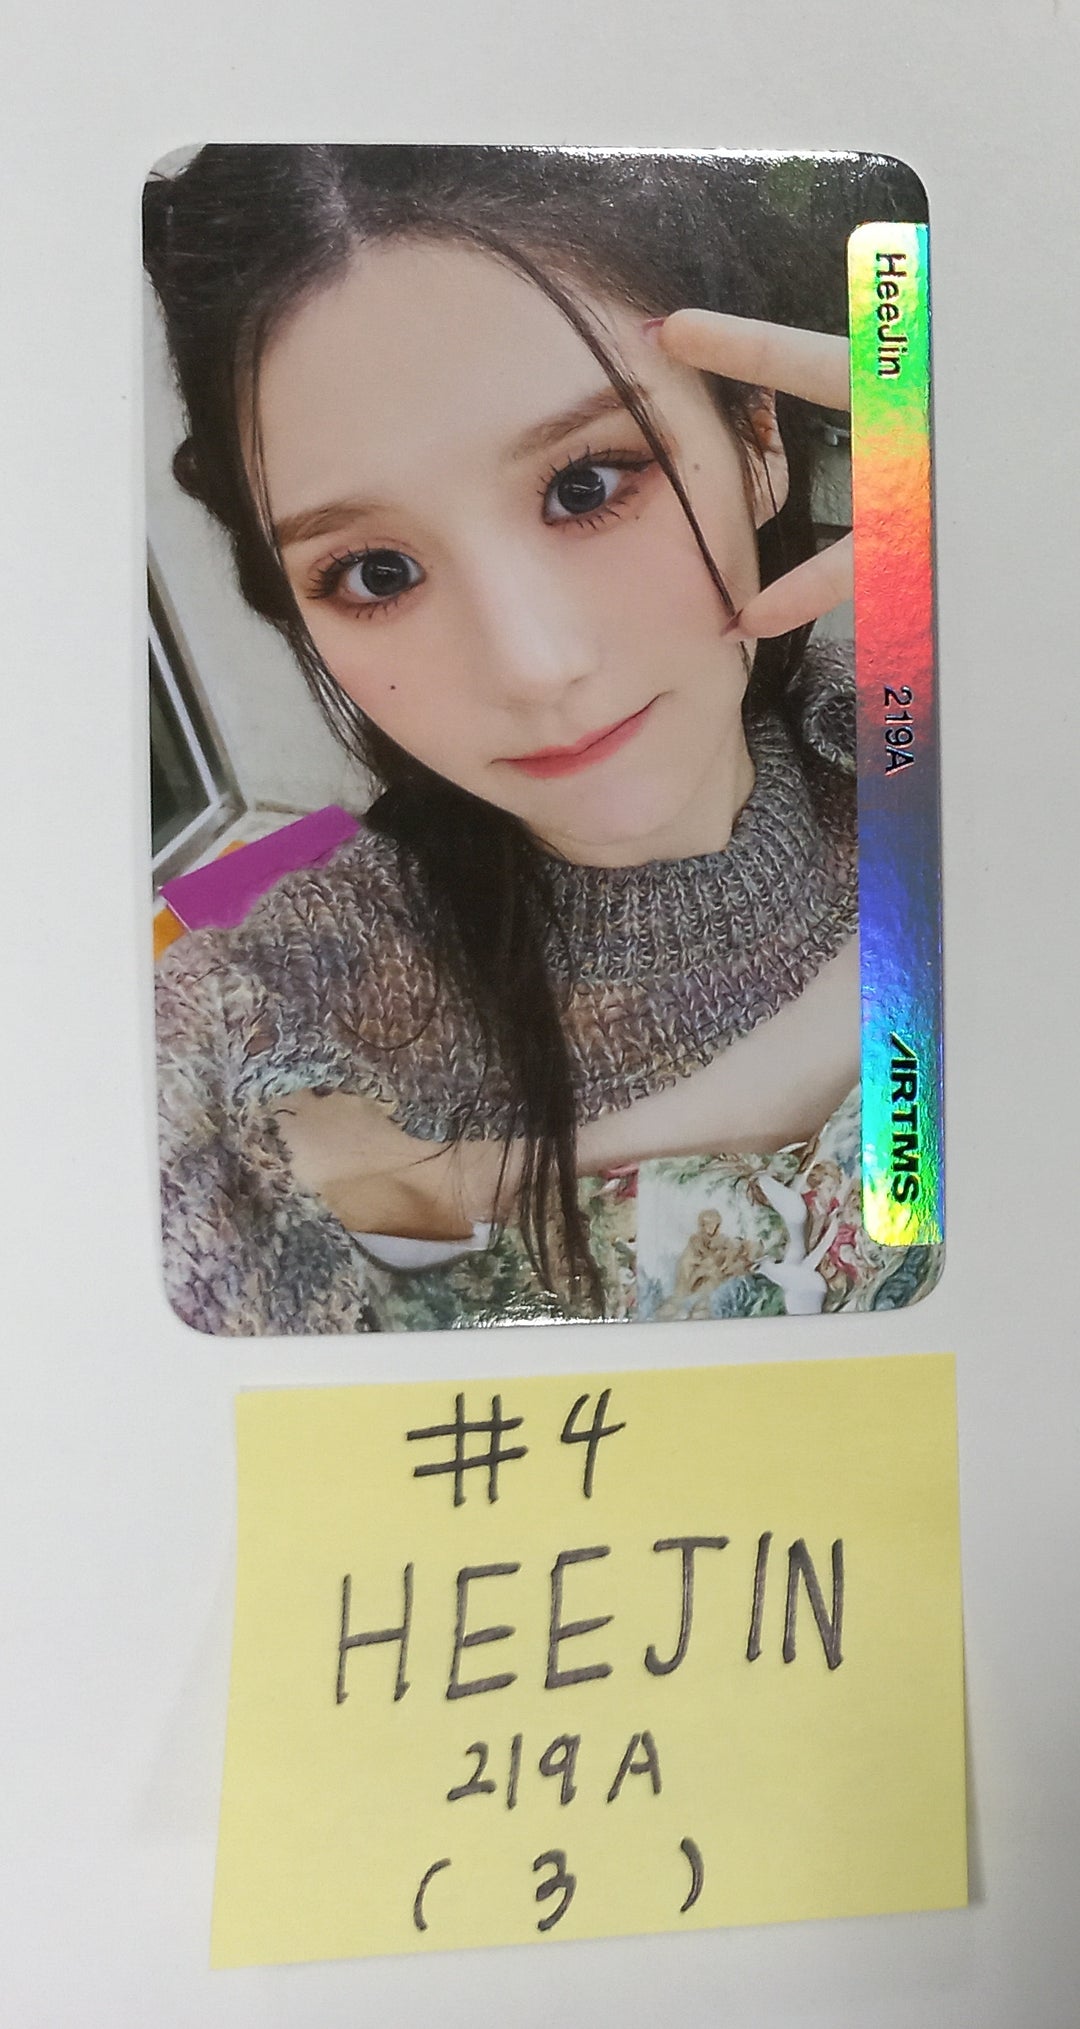 HeeJin "K" Album OBJEKT A01 - Official Photocard, Book Mark, Visual Card Set (3EA) [23.11.03]